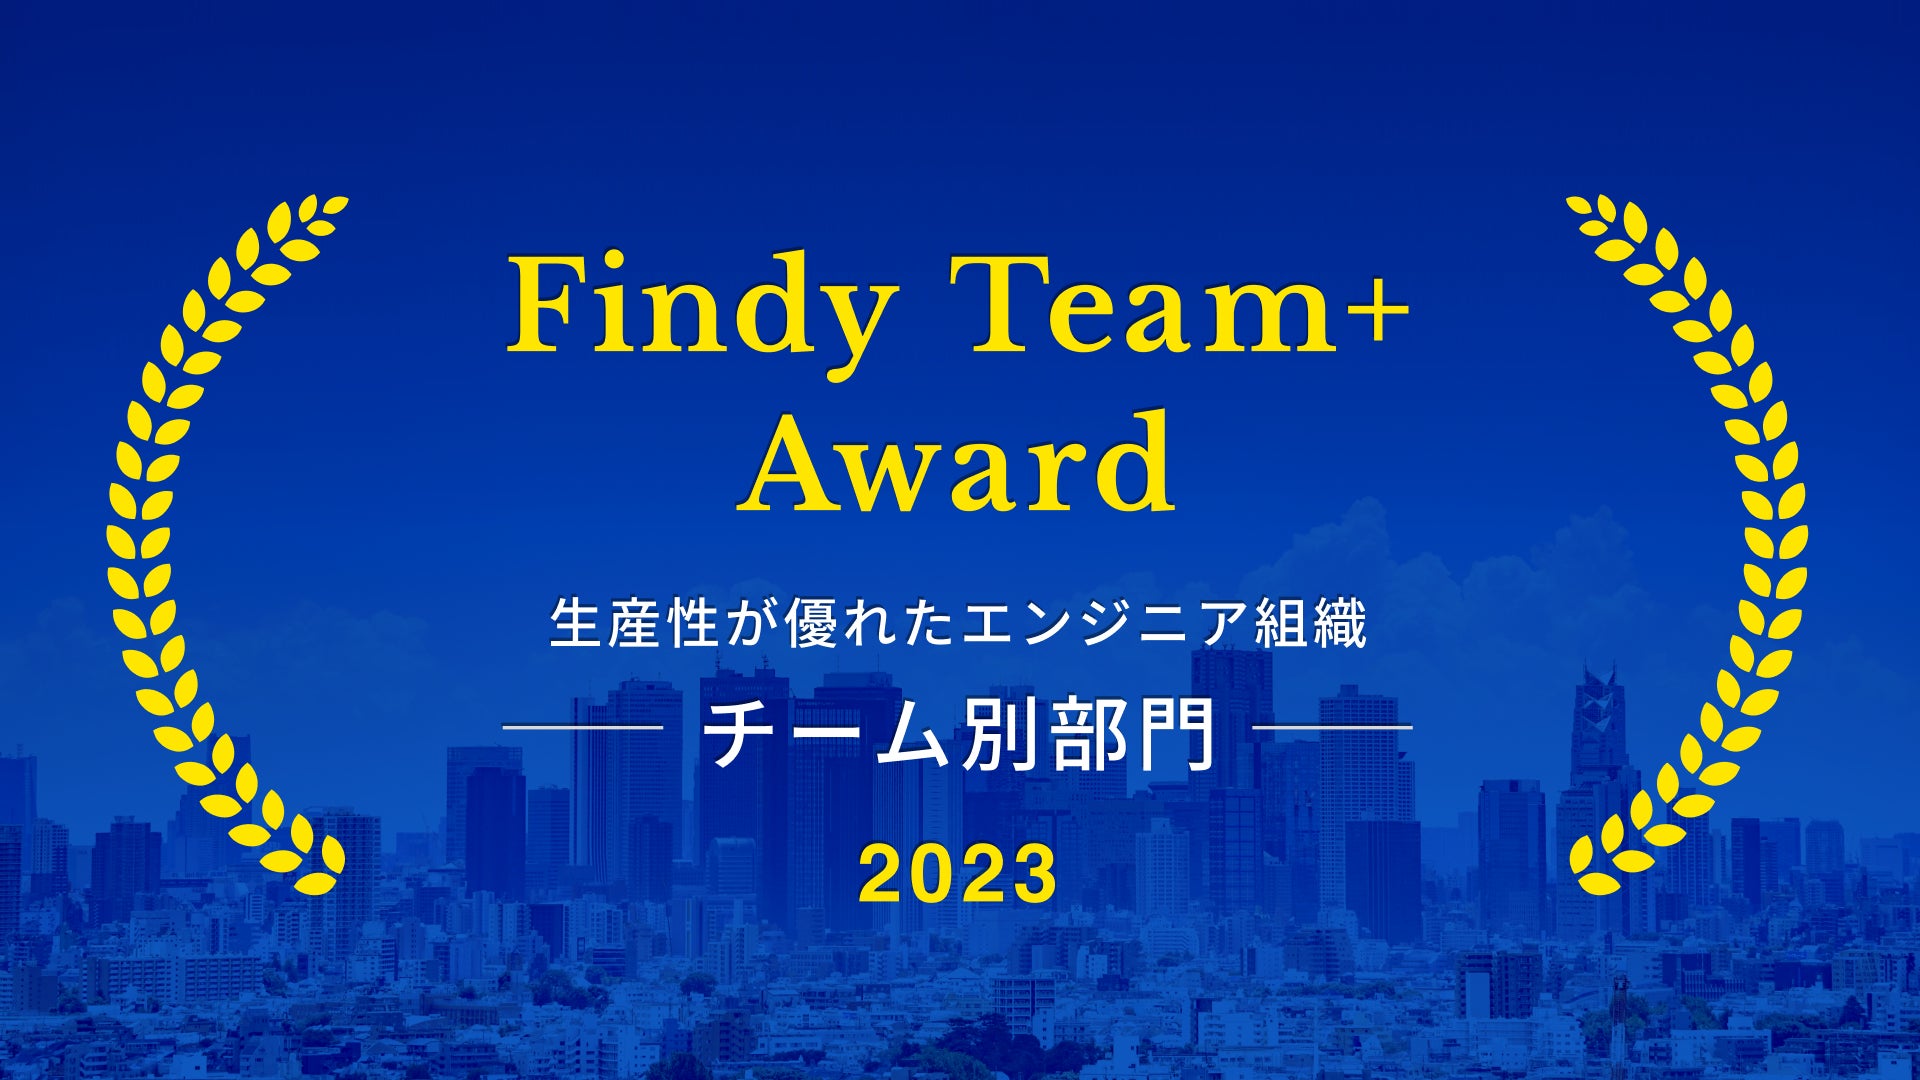 justInCaseTechnologiesが「Findy Team+ Award 2023」を受賞